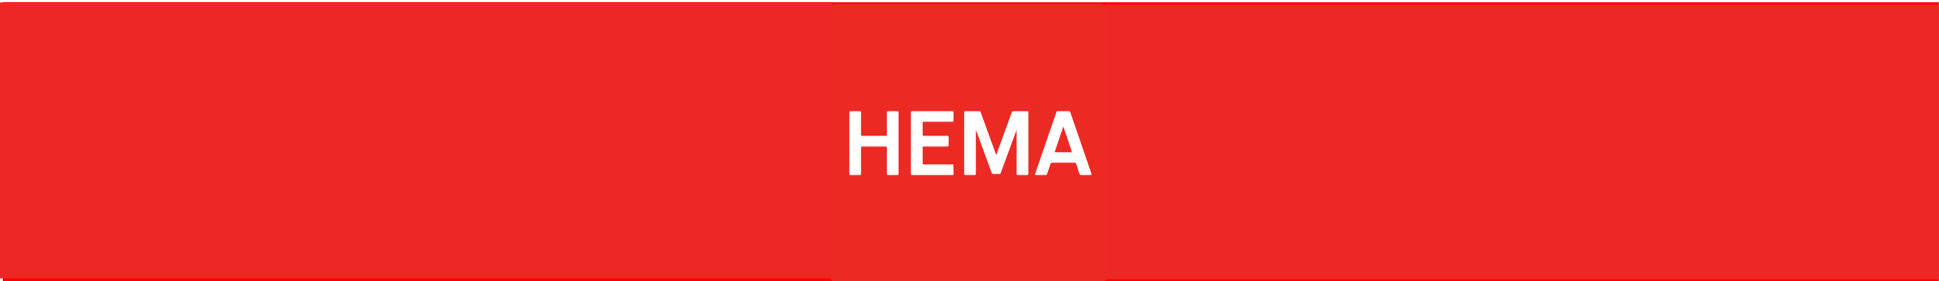 HEMA logo